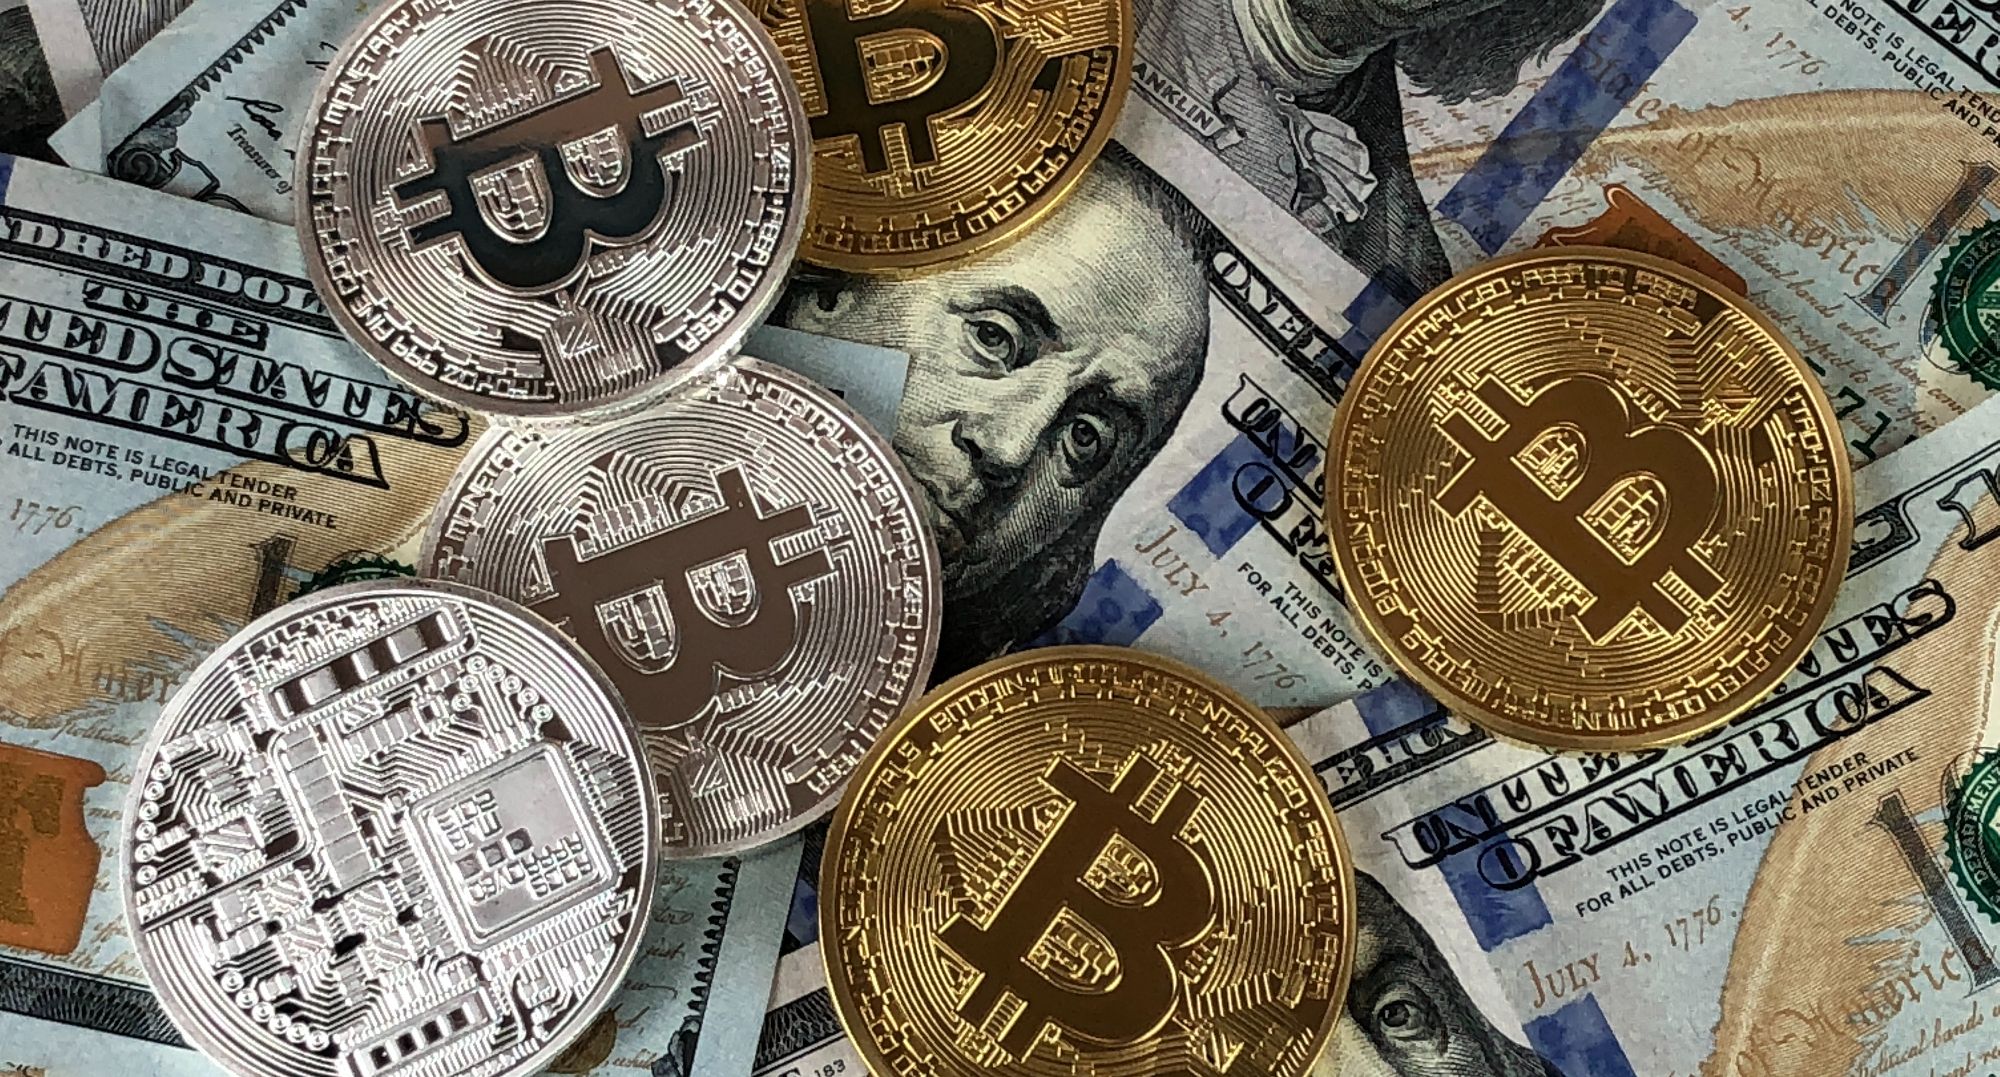 Bitcoin coins above US banknotes